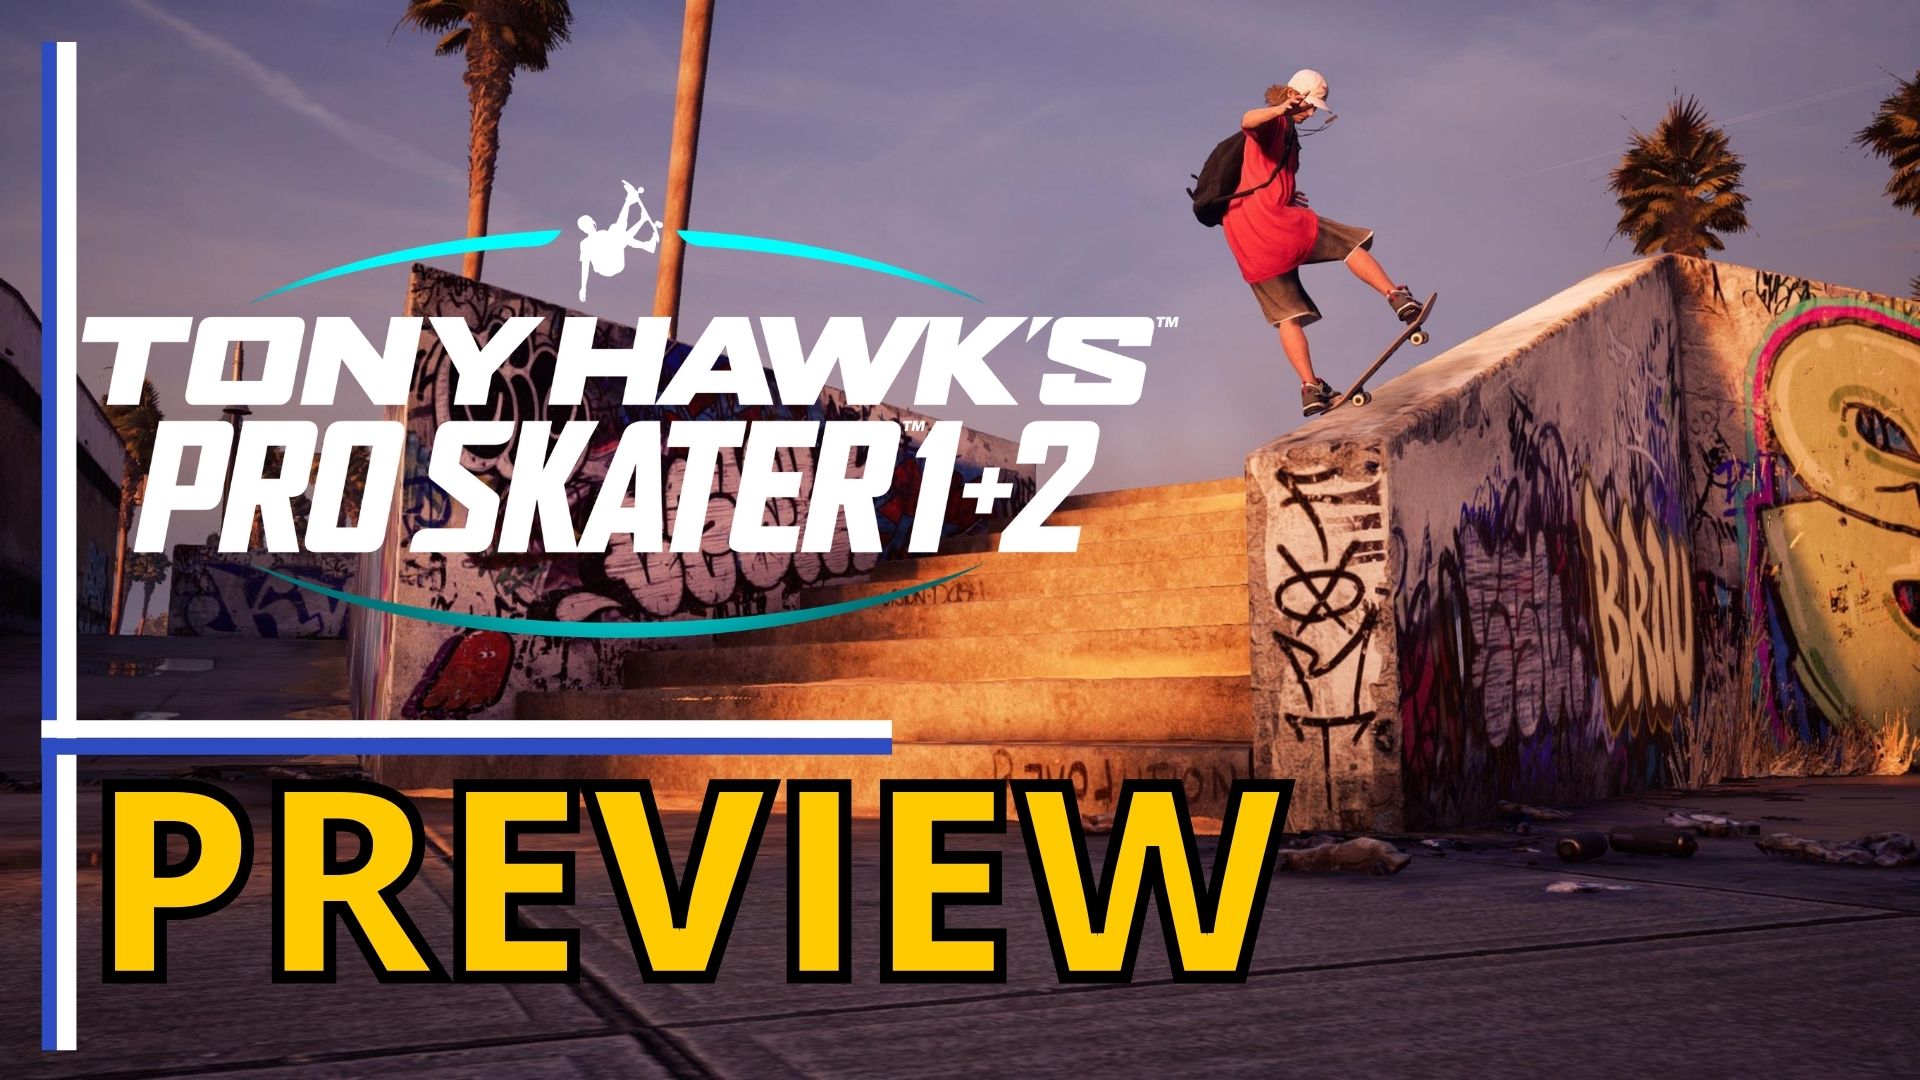 Preview: Tony Hawk's Pro Skater 1+2